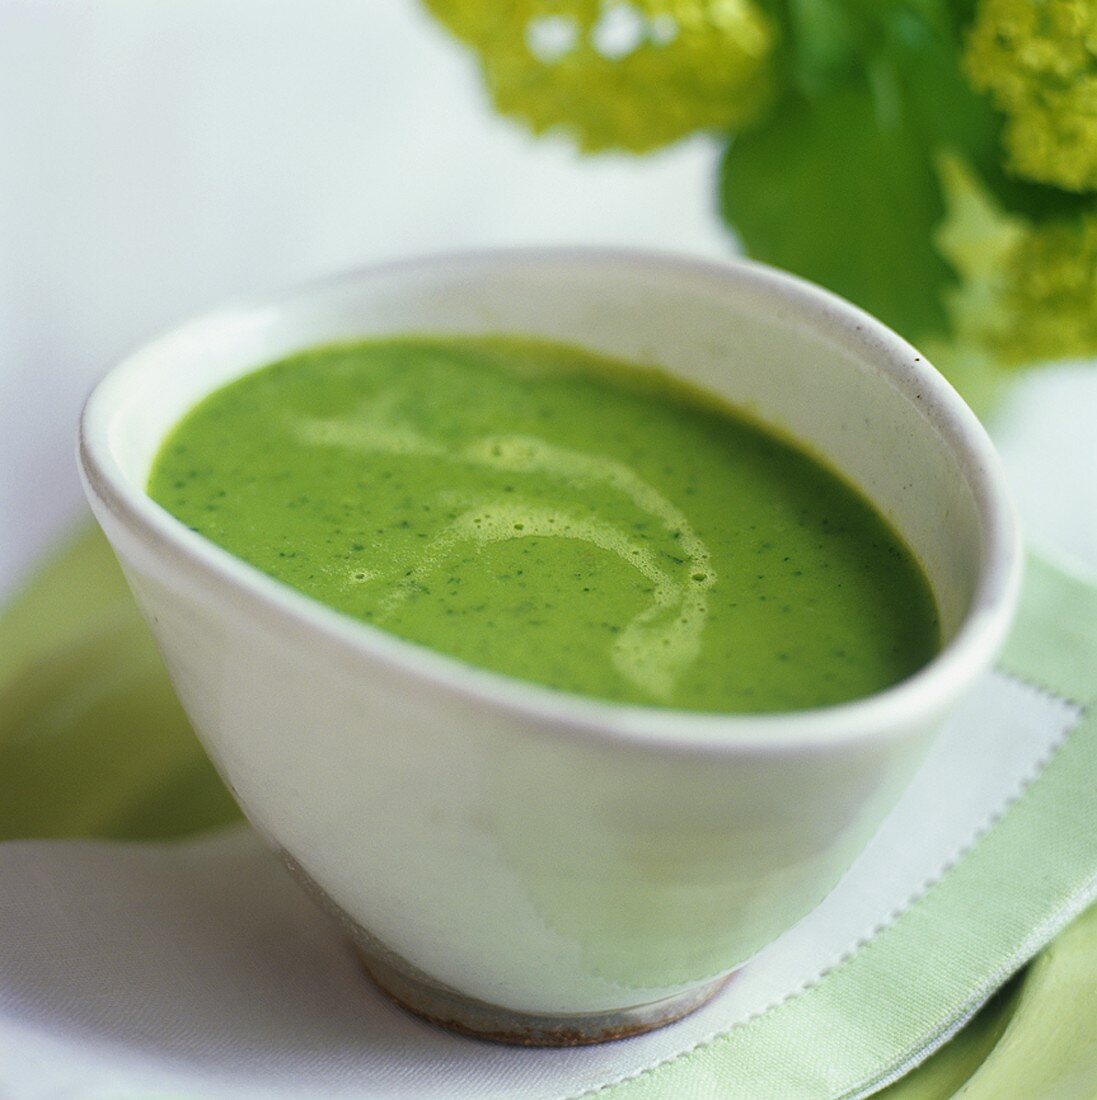 Green vegetable cream soup